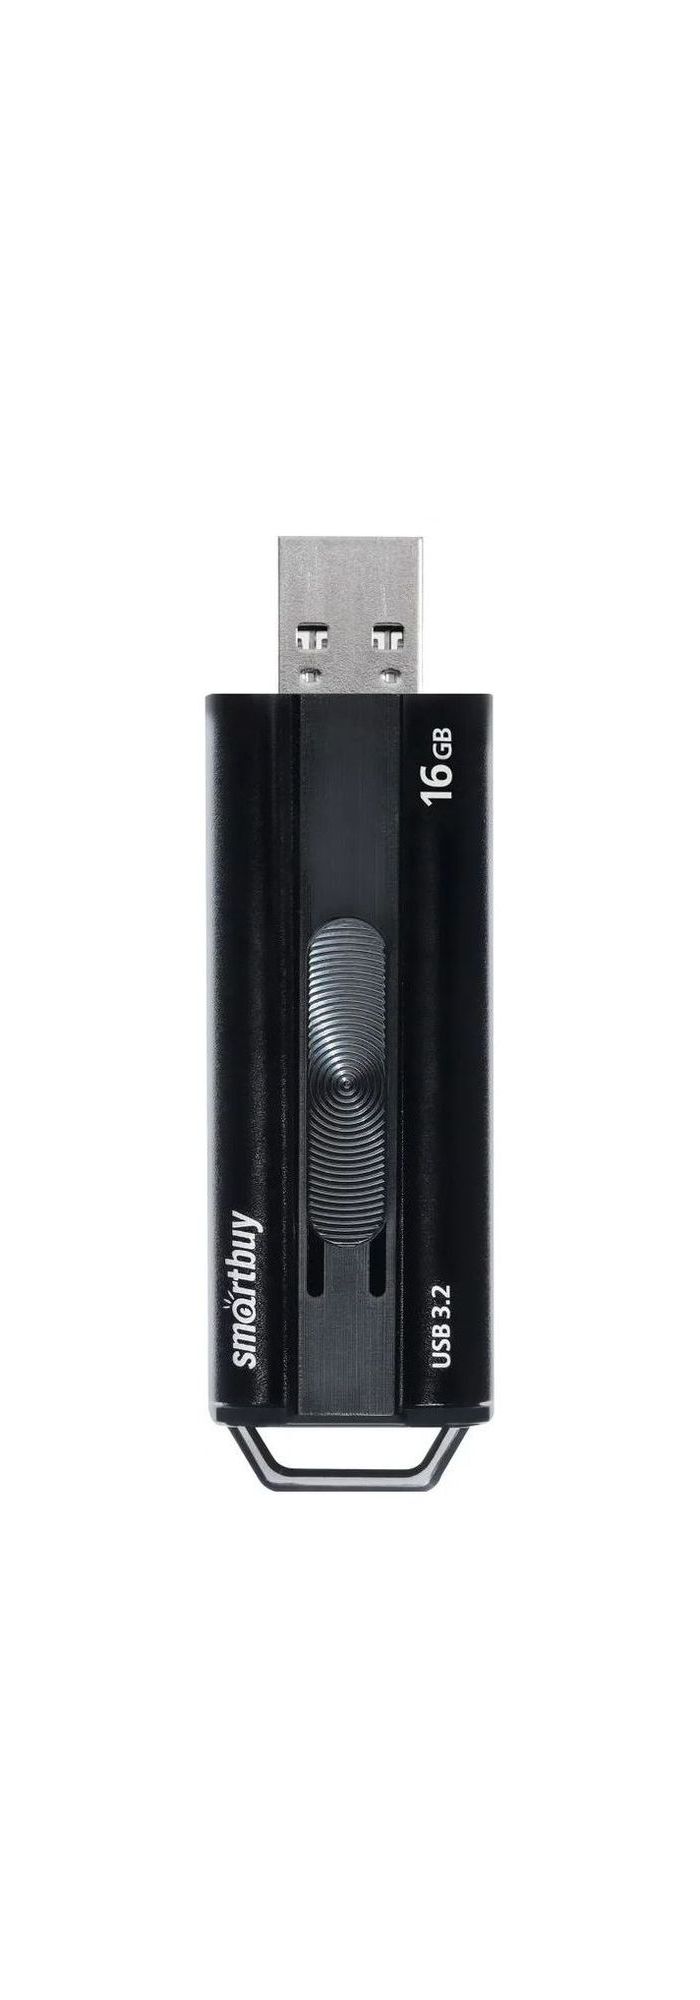 Карта памяти SmartBuy 16GB USB 3.0 Iron-2 Metal Black (SB016GBIR2K)